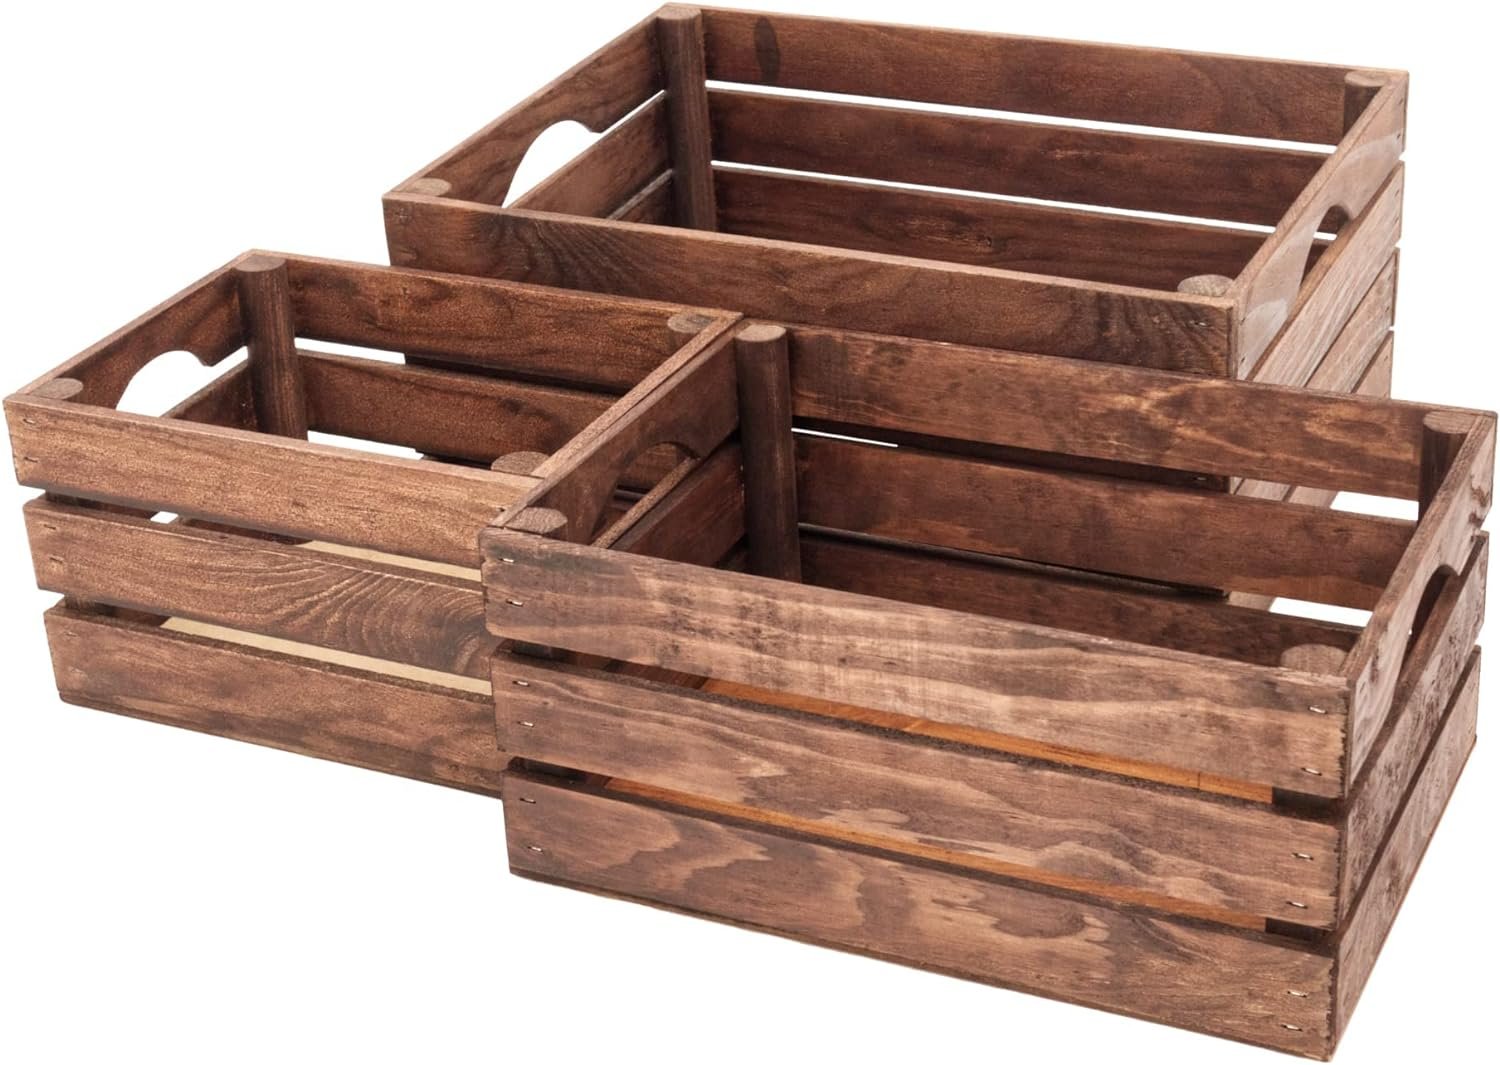 Rustic Wood Crates Review